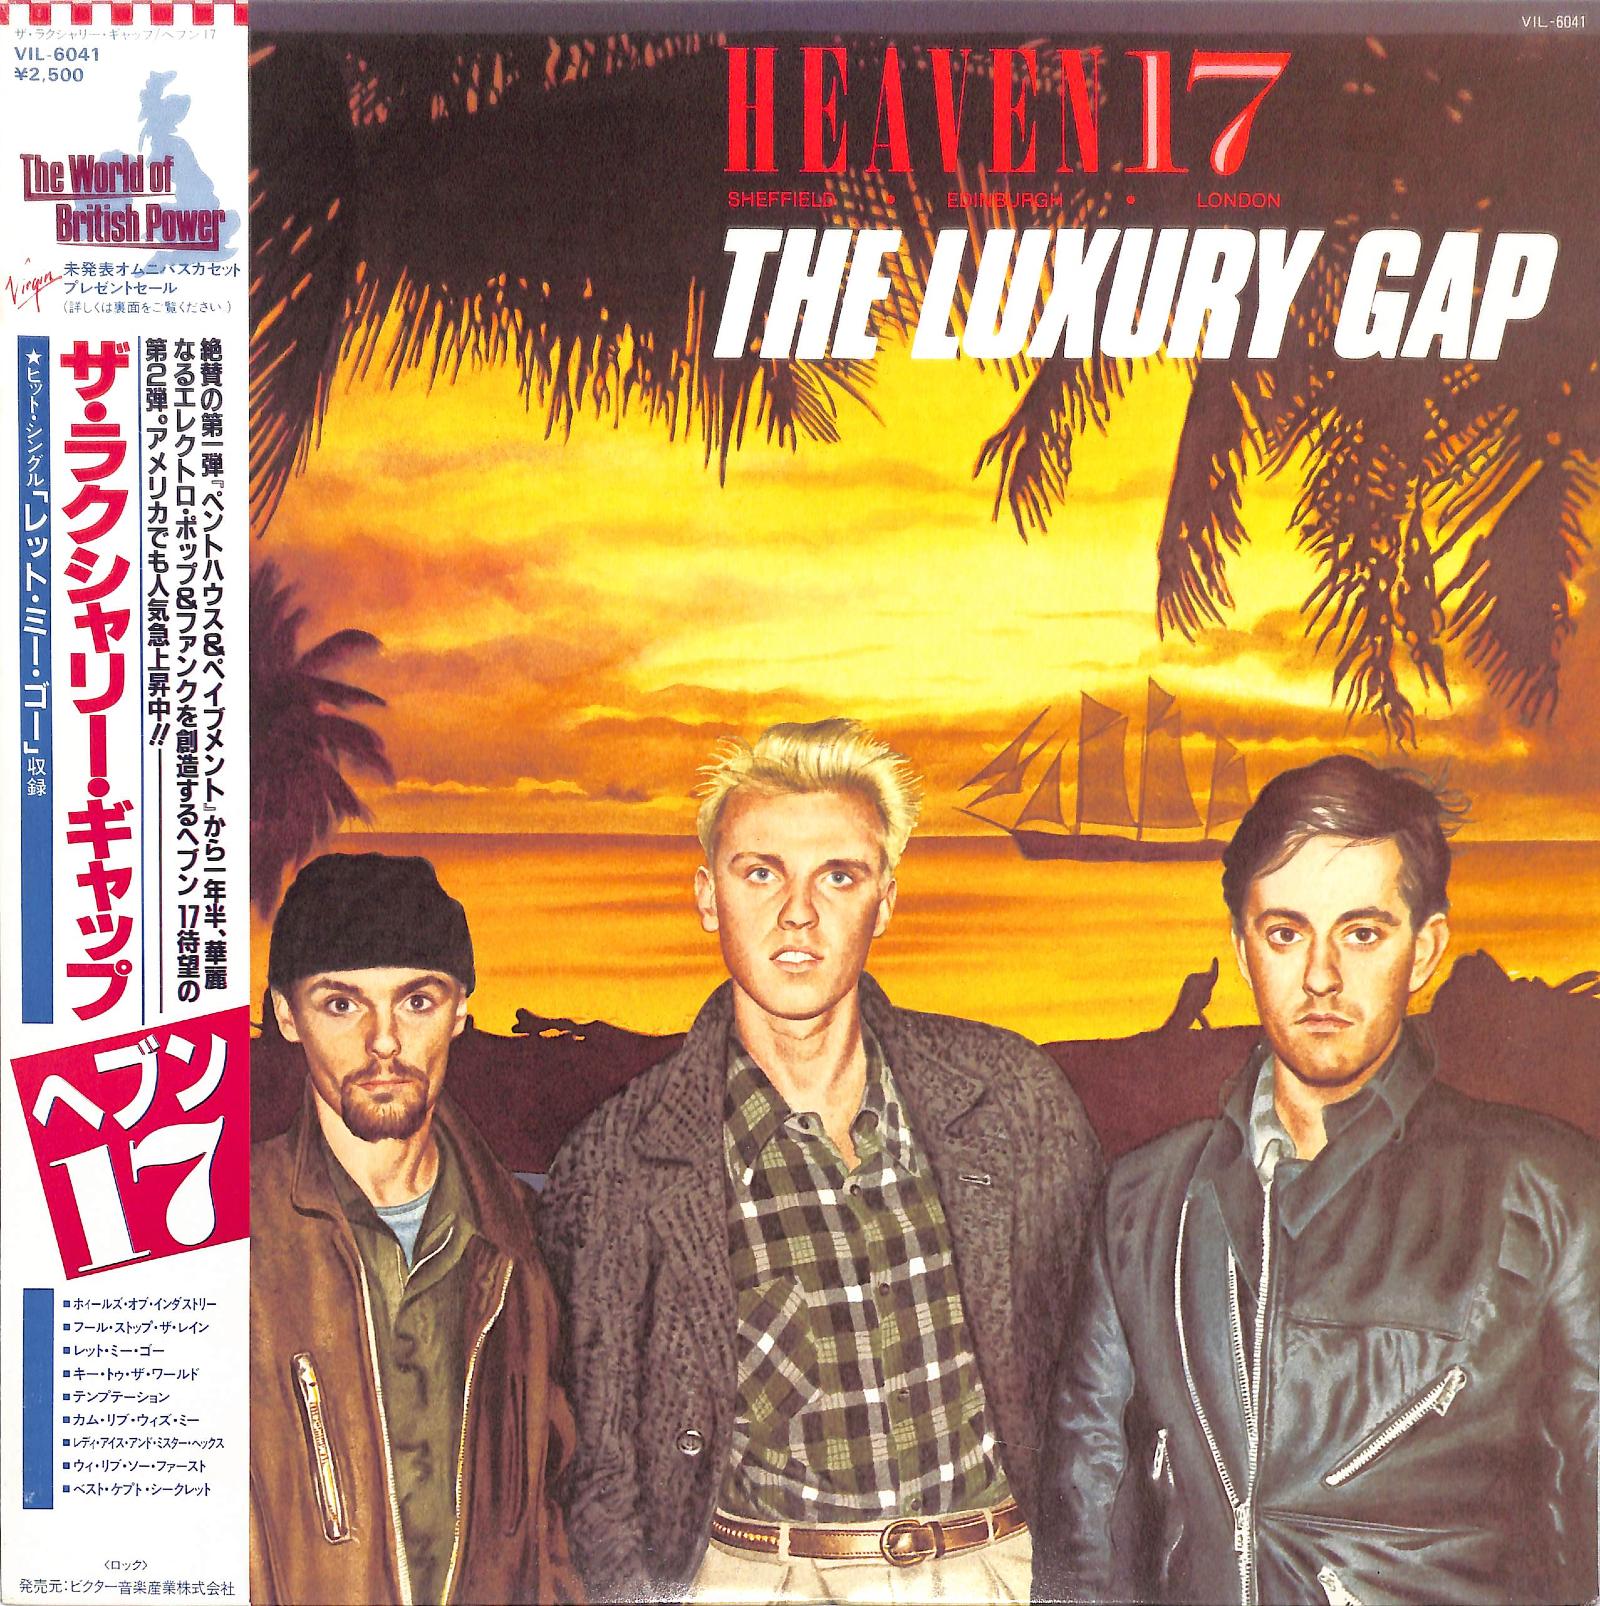 HEAVEN 17 - The Luxury Gap